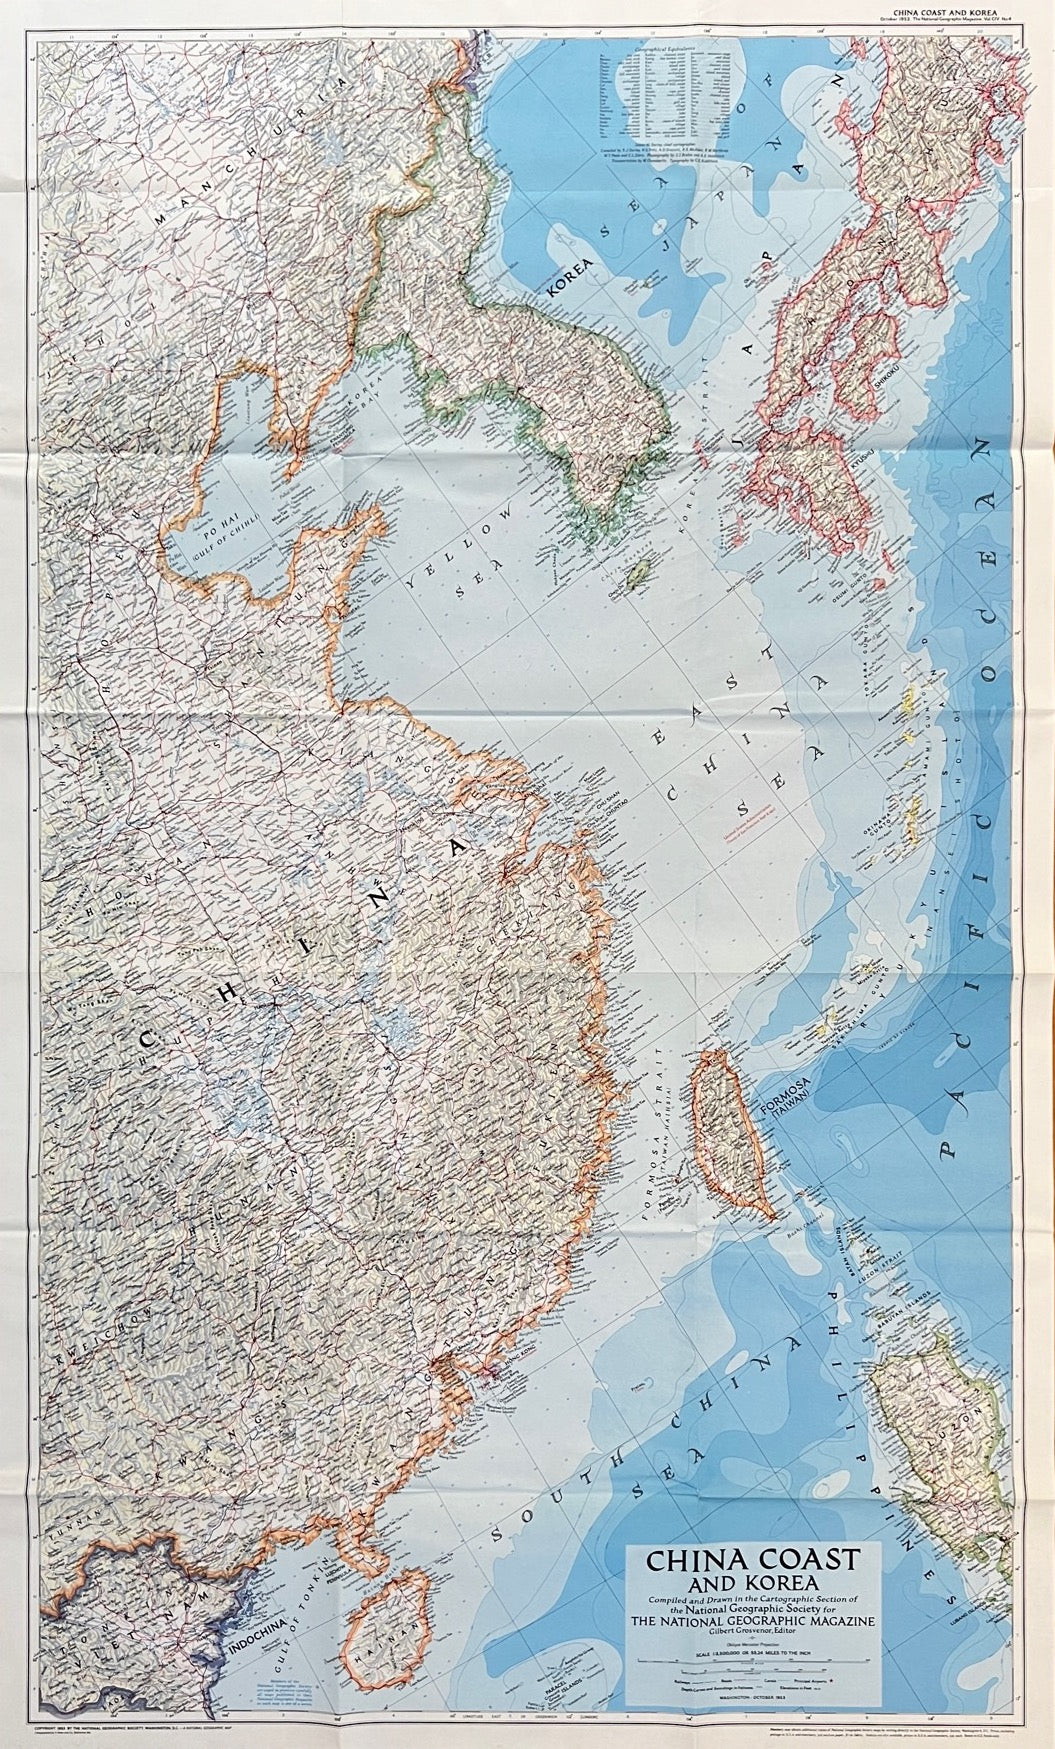 Vintage Map Print - Asia - National Geographic - China Coast - Korea - 1968 - Dahlströms Fine Art